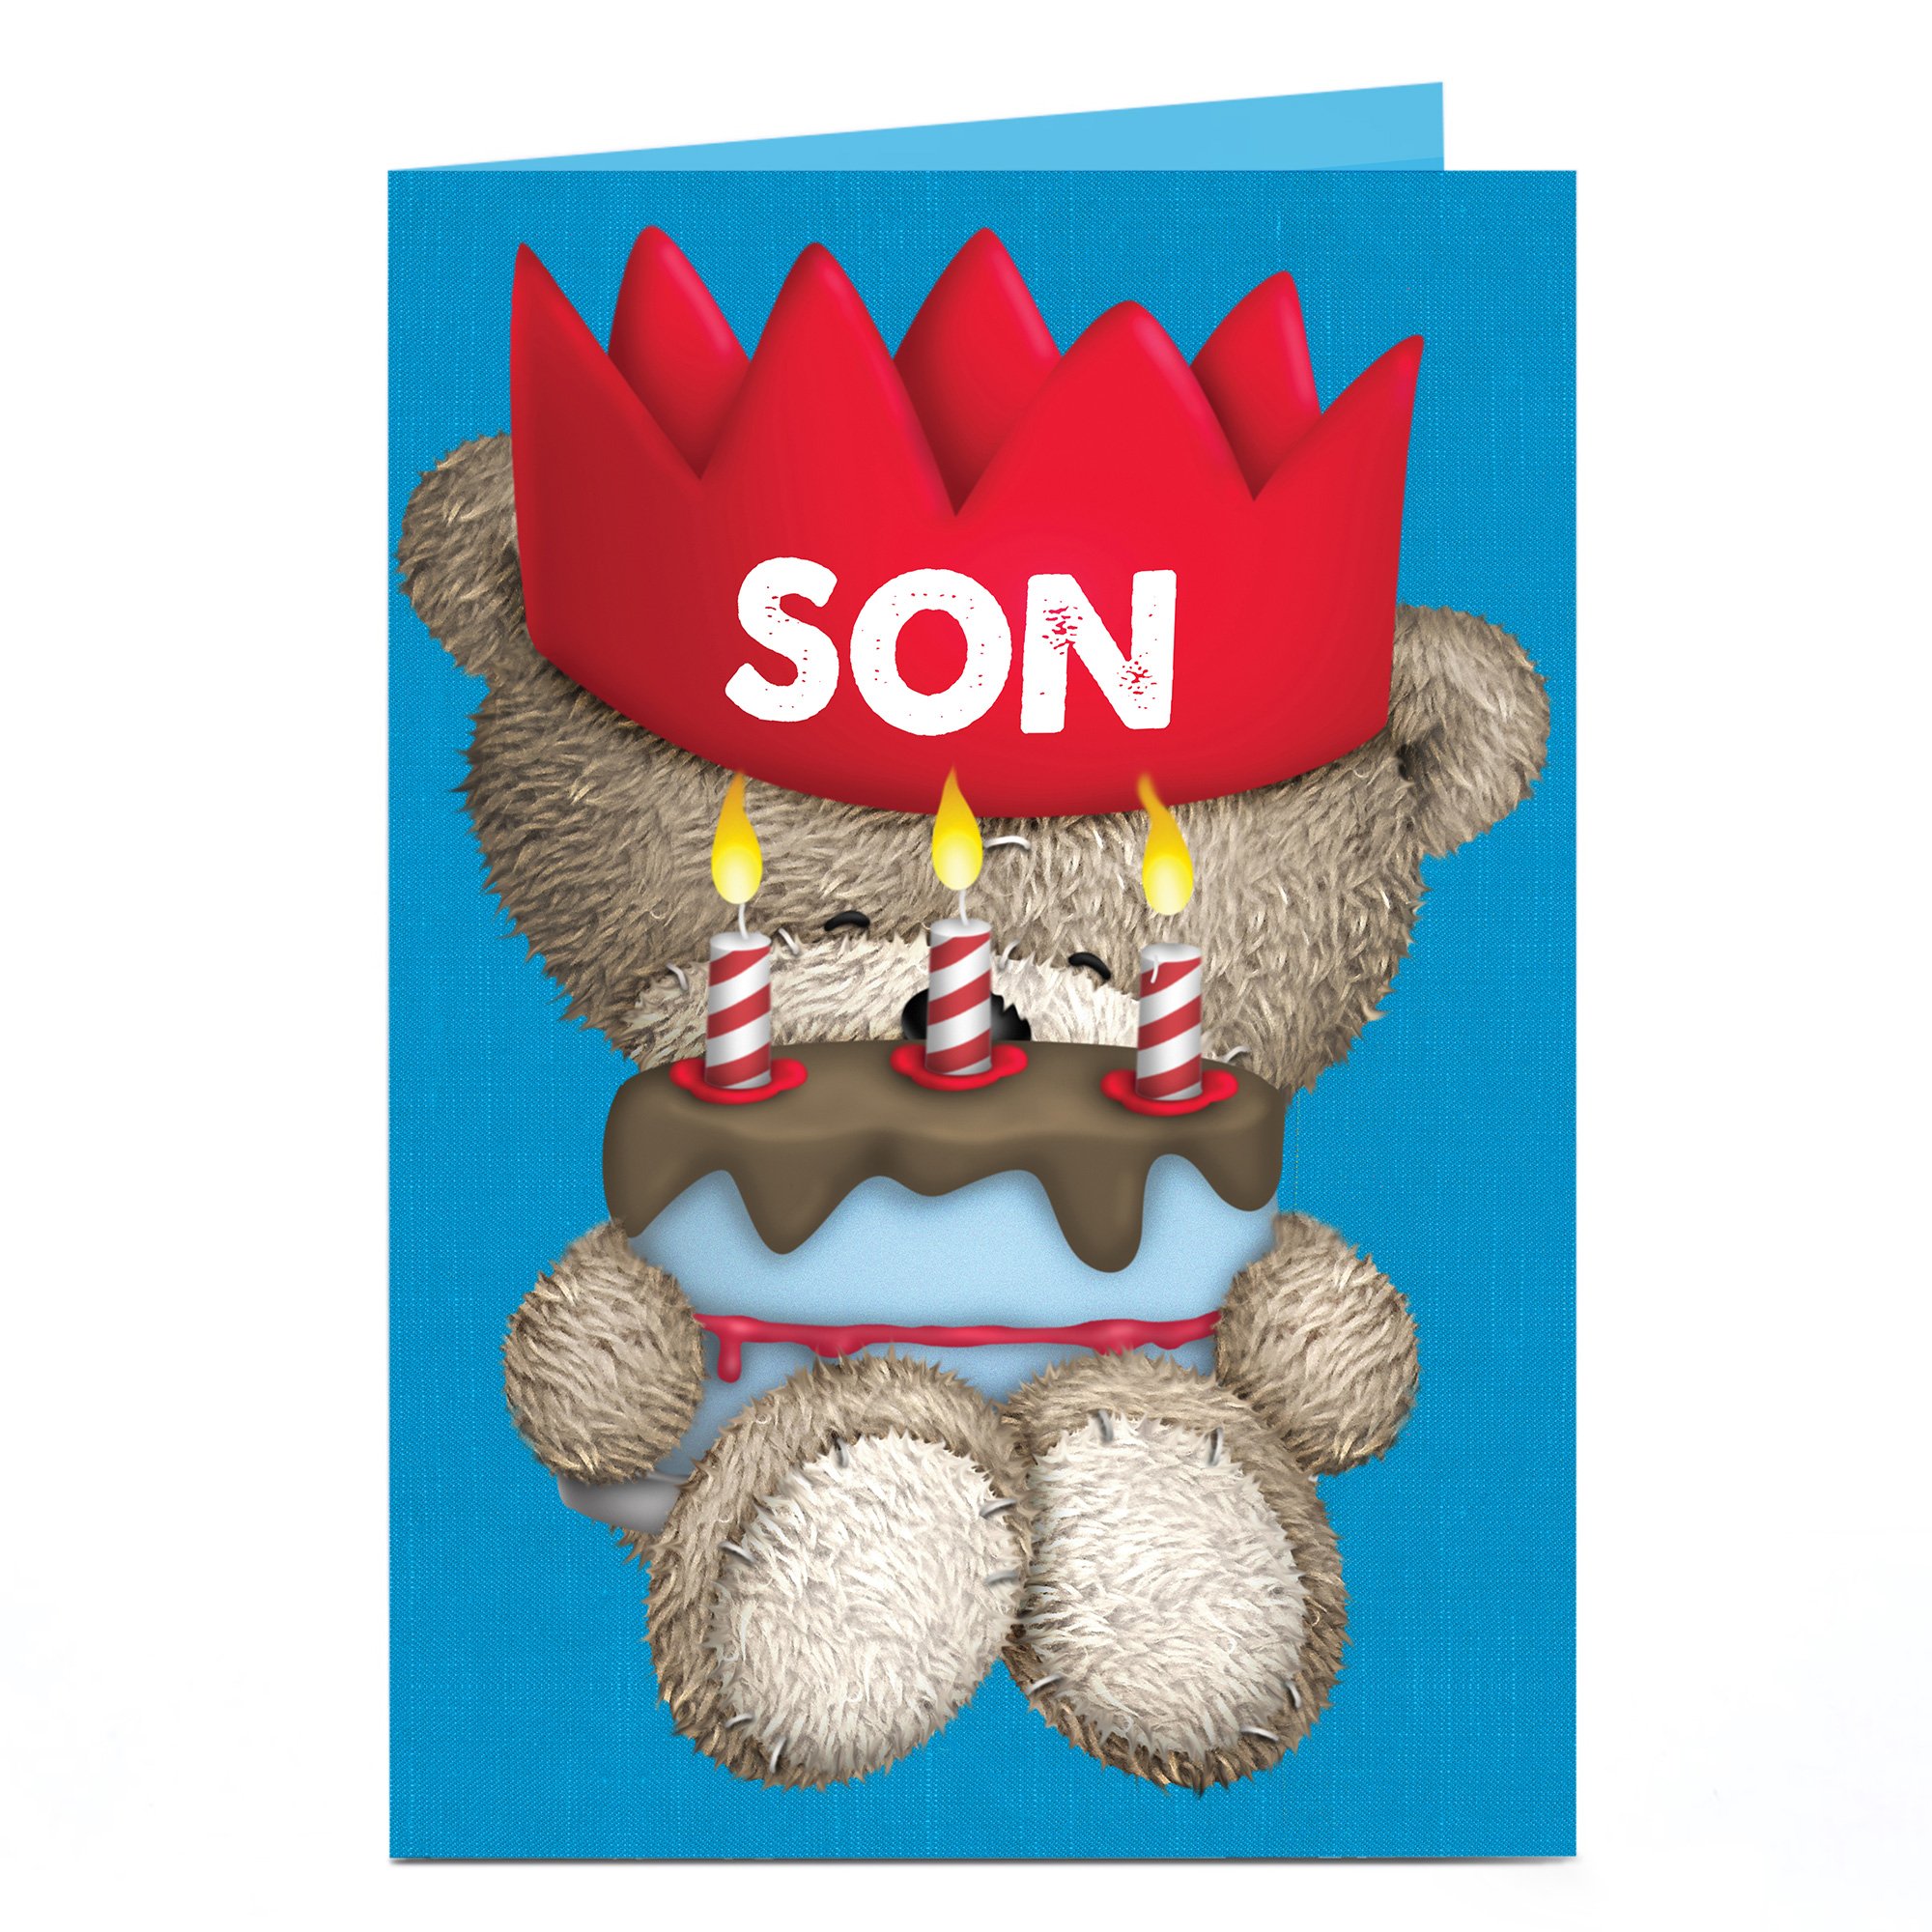 Personalised Hugs Birthday Card - Red Crown [Son]